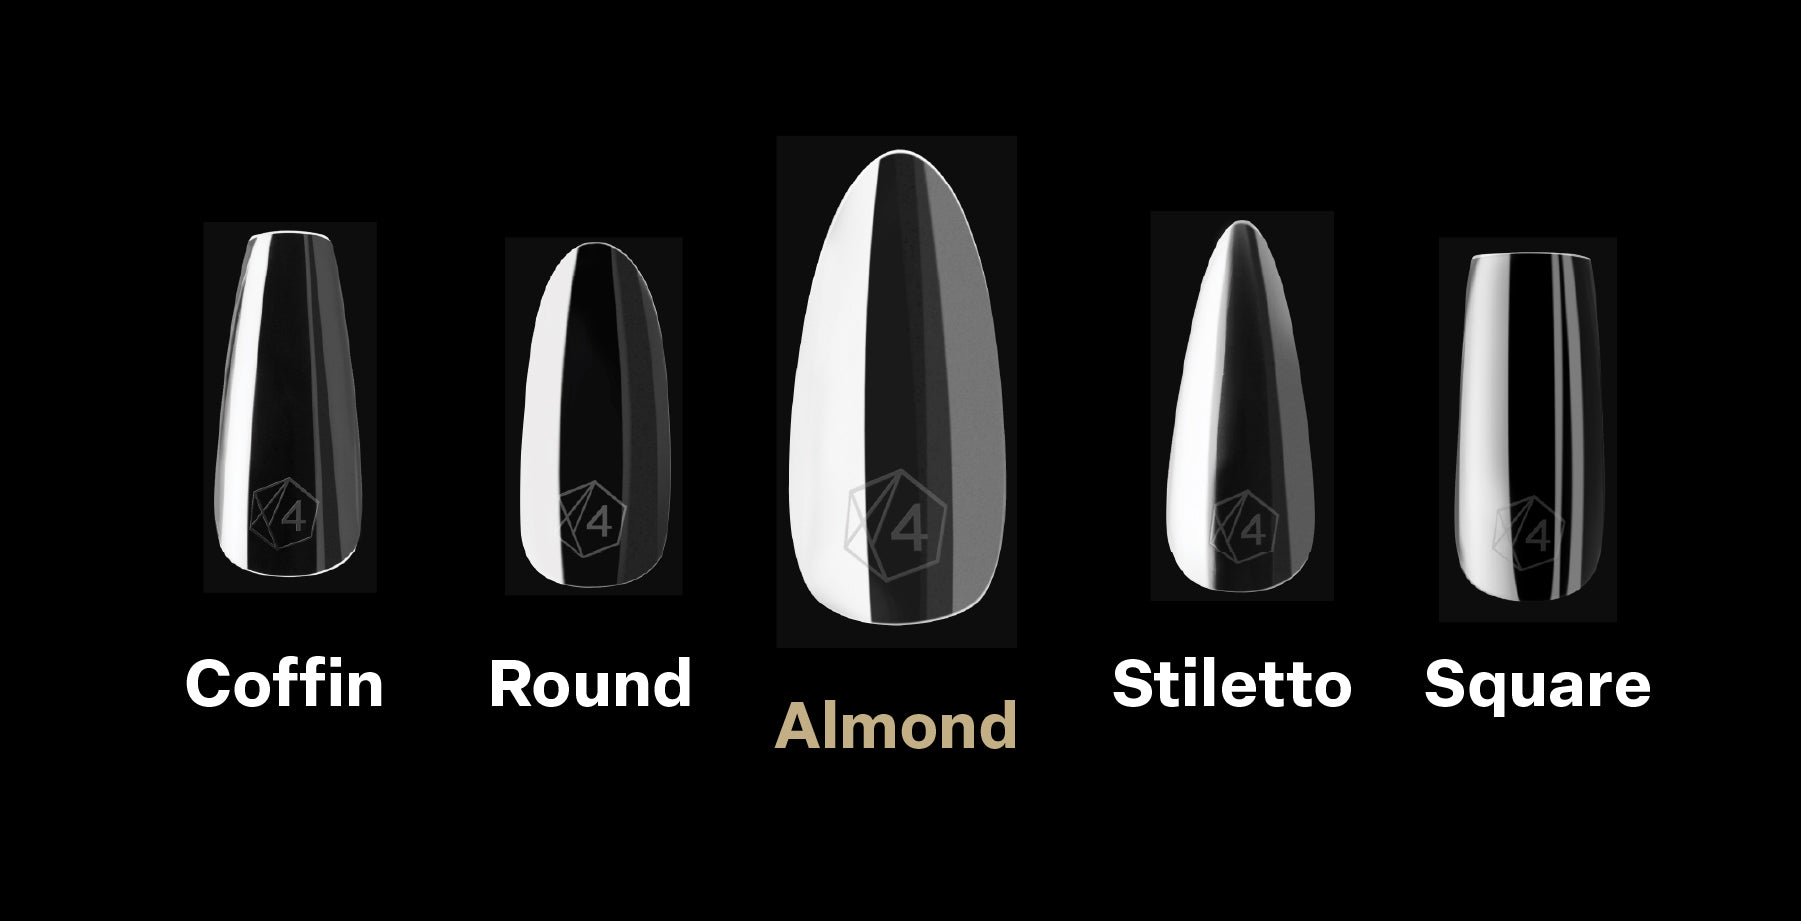 Gel-X® Natural Almond Extra Short Box of Tips - Pro (600pcs) – Aprés Nail